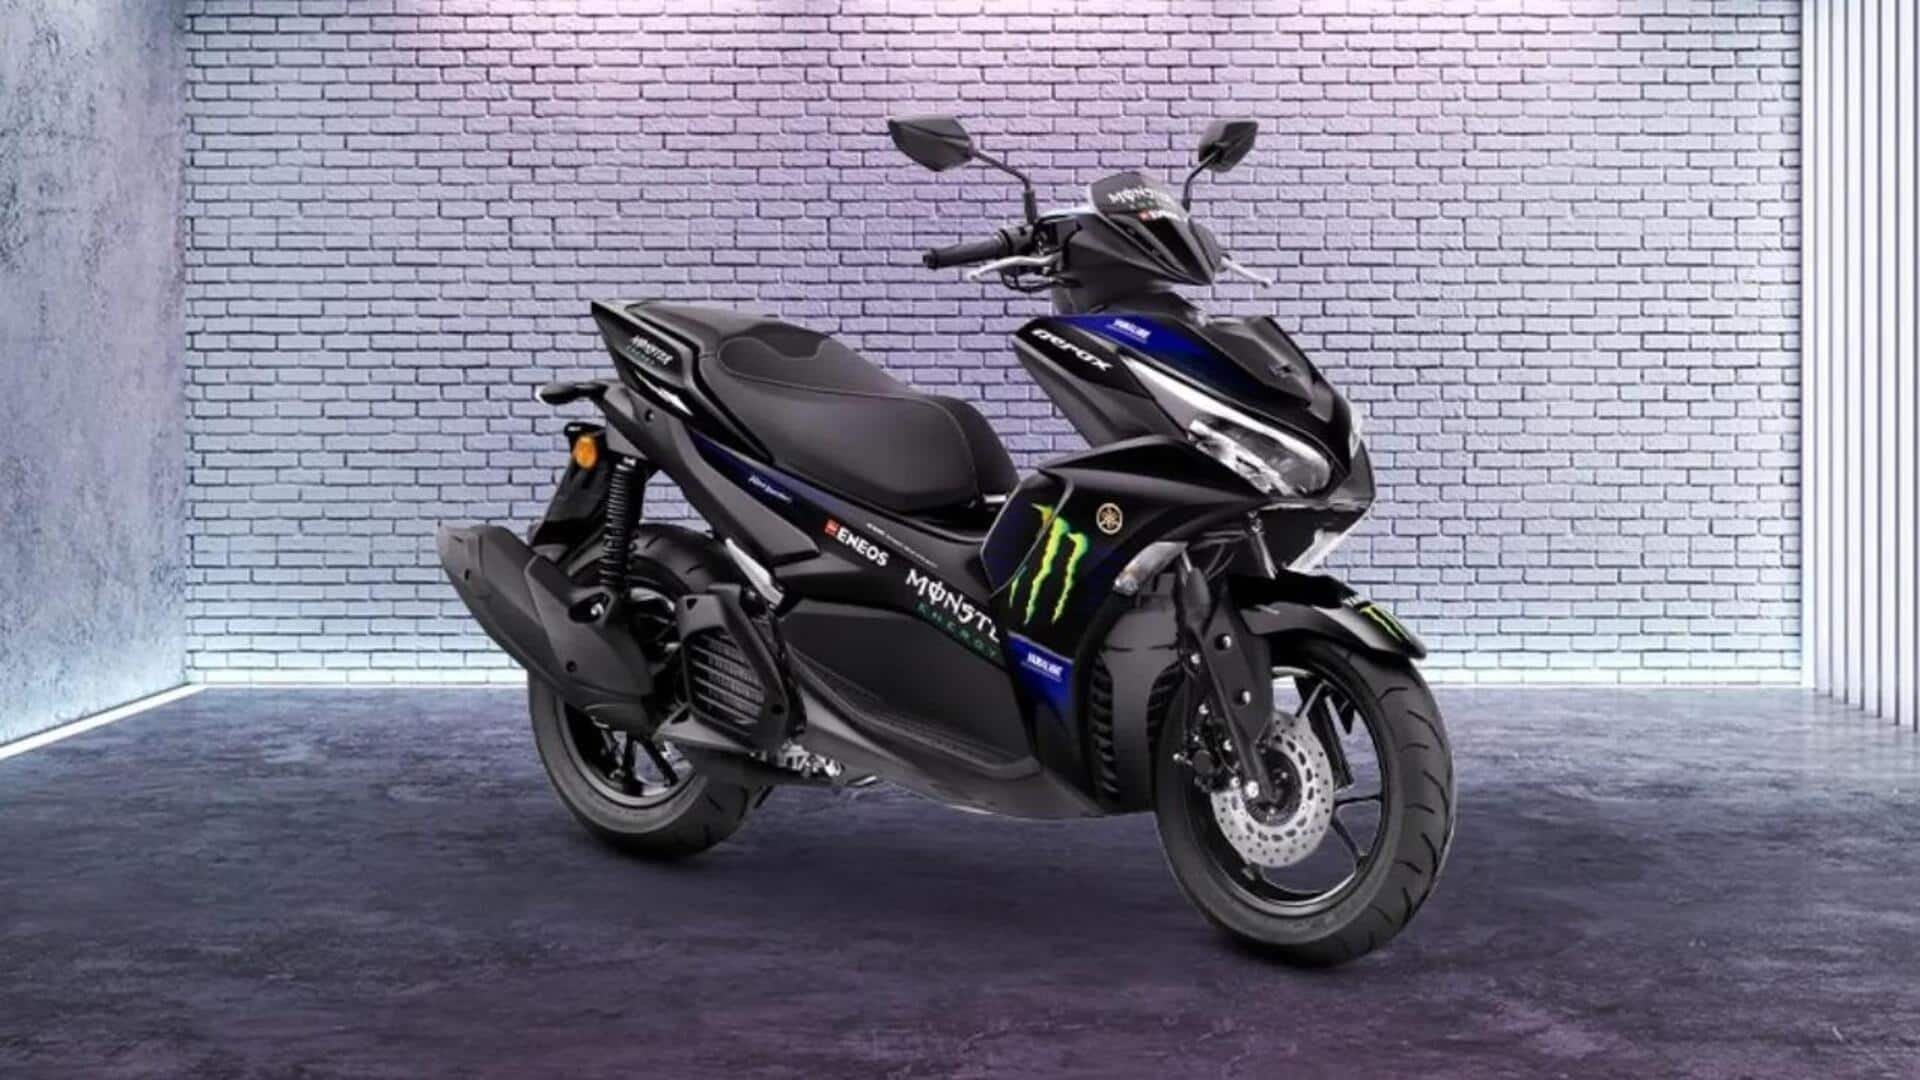 Yamaha Aerox MotoGP Edition goes official at Rs. 1.48 lakh